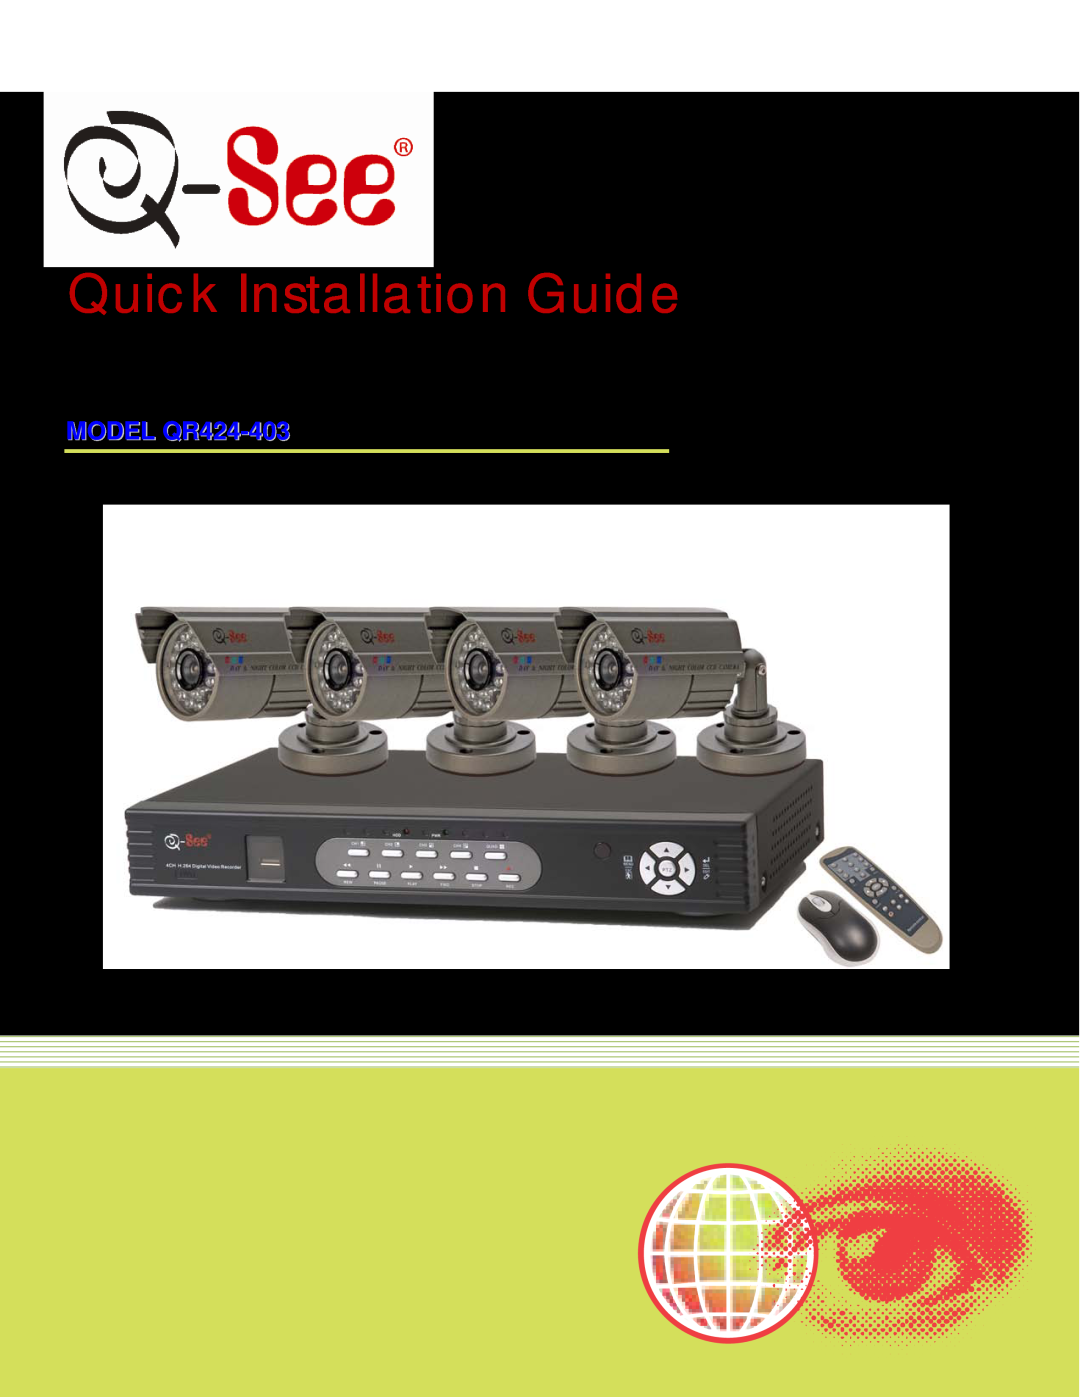 Q-See manual Quick Installation Guide, Color CCD Camera Kits, MODEL QR424-403 